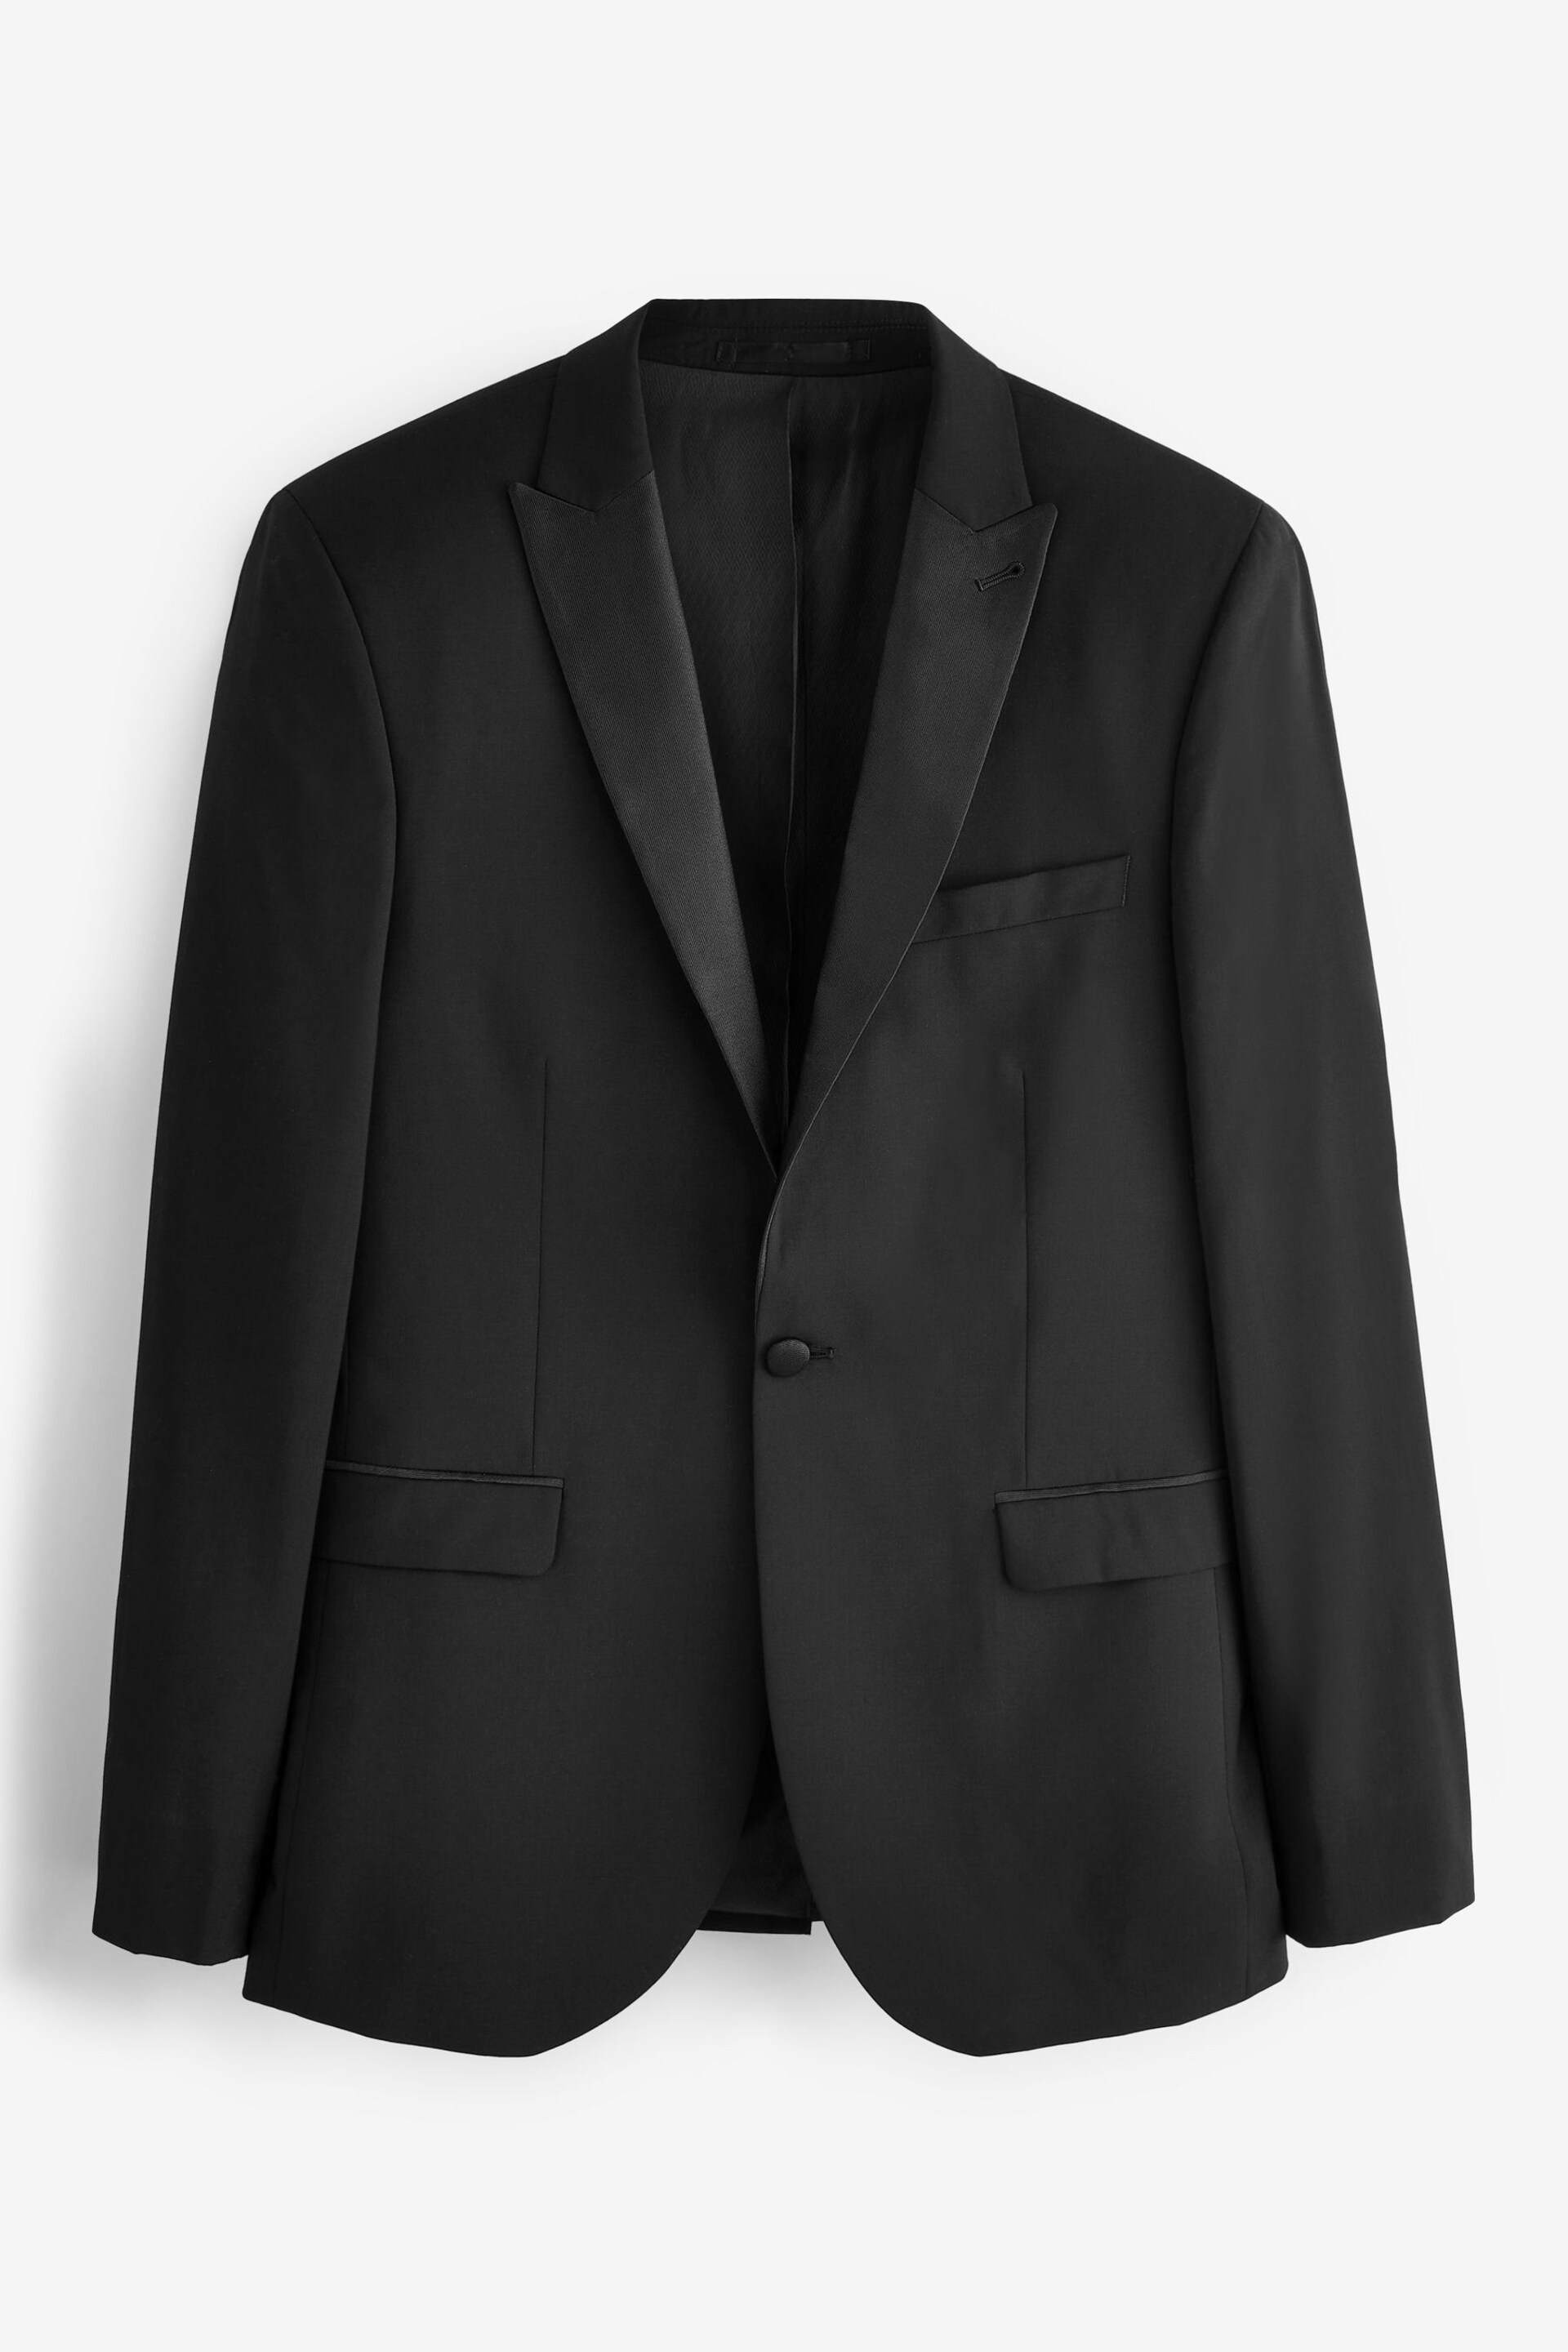 Black Slim Signature Tollegno Wool Suit Jacket - Image 6 of 9